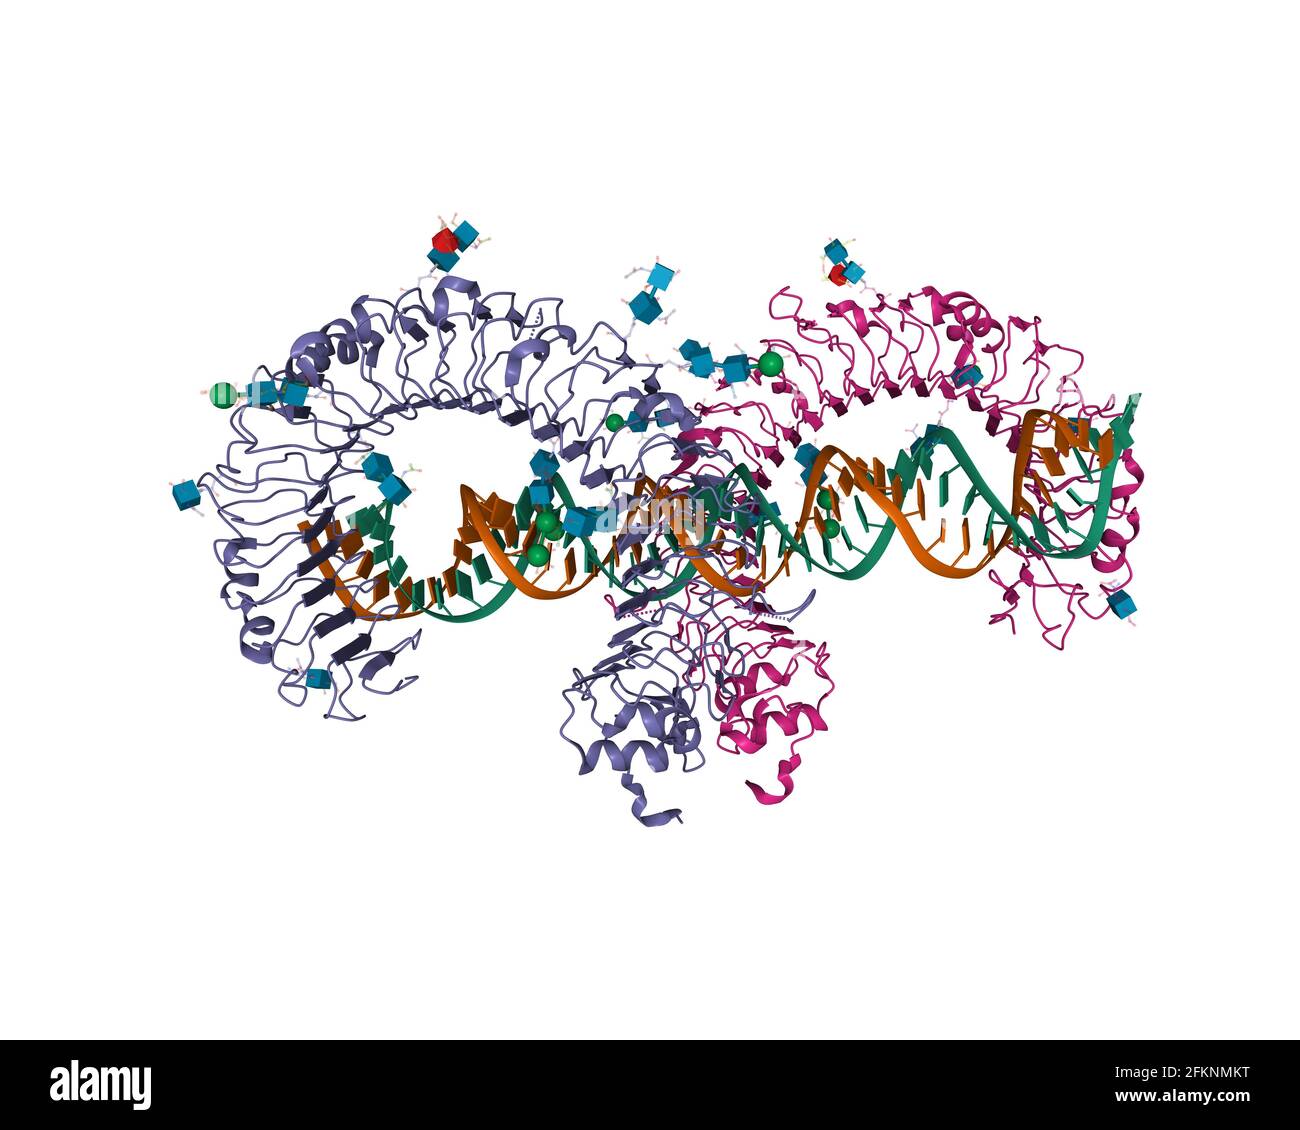 Maus-toll-like-Rezeptor 3 Ektodomain-Homodimer, komplex mit doppelsträngiger RNA, 3D-Cartoon-Modell, weißer Hintergrund Stockfoto